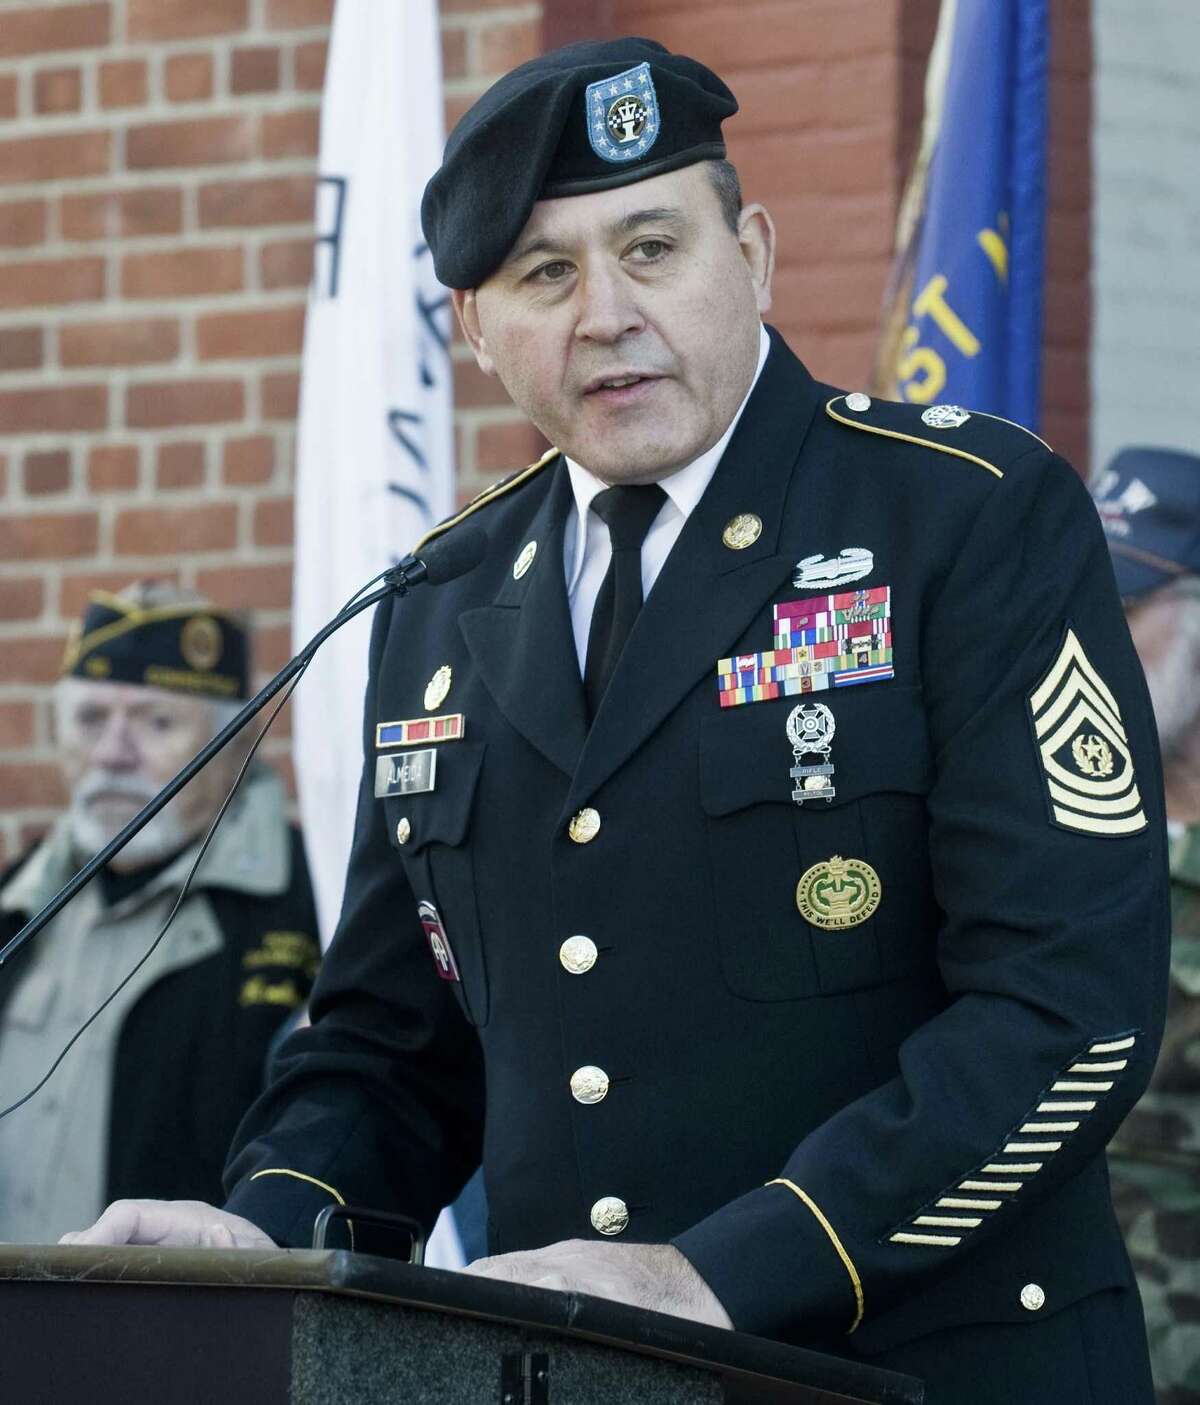 Al Almeida of Danbury was the guest speaker in the Veteran's Day ceremony at the War Memorial in 2016.